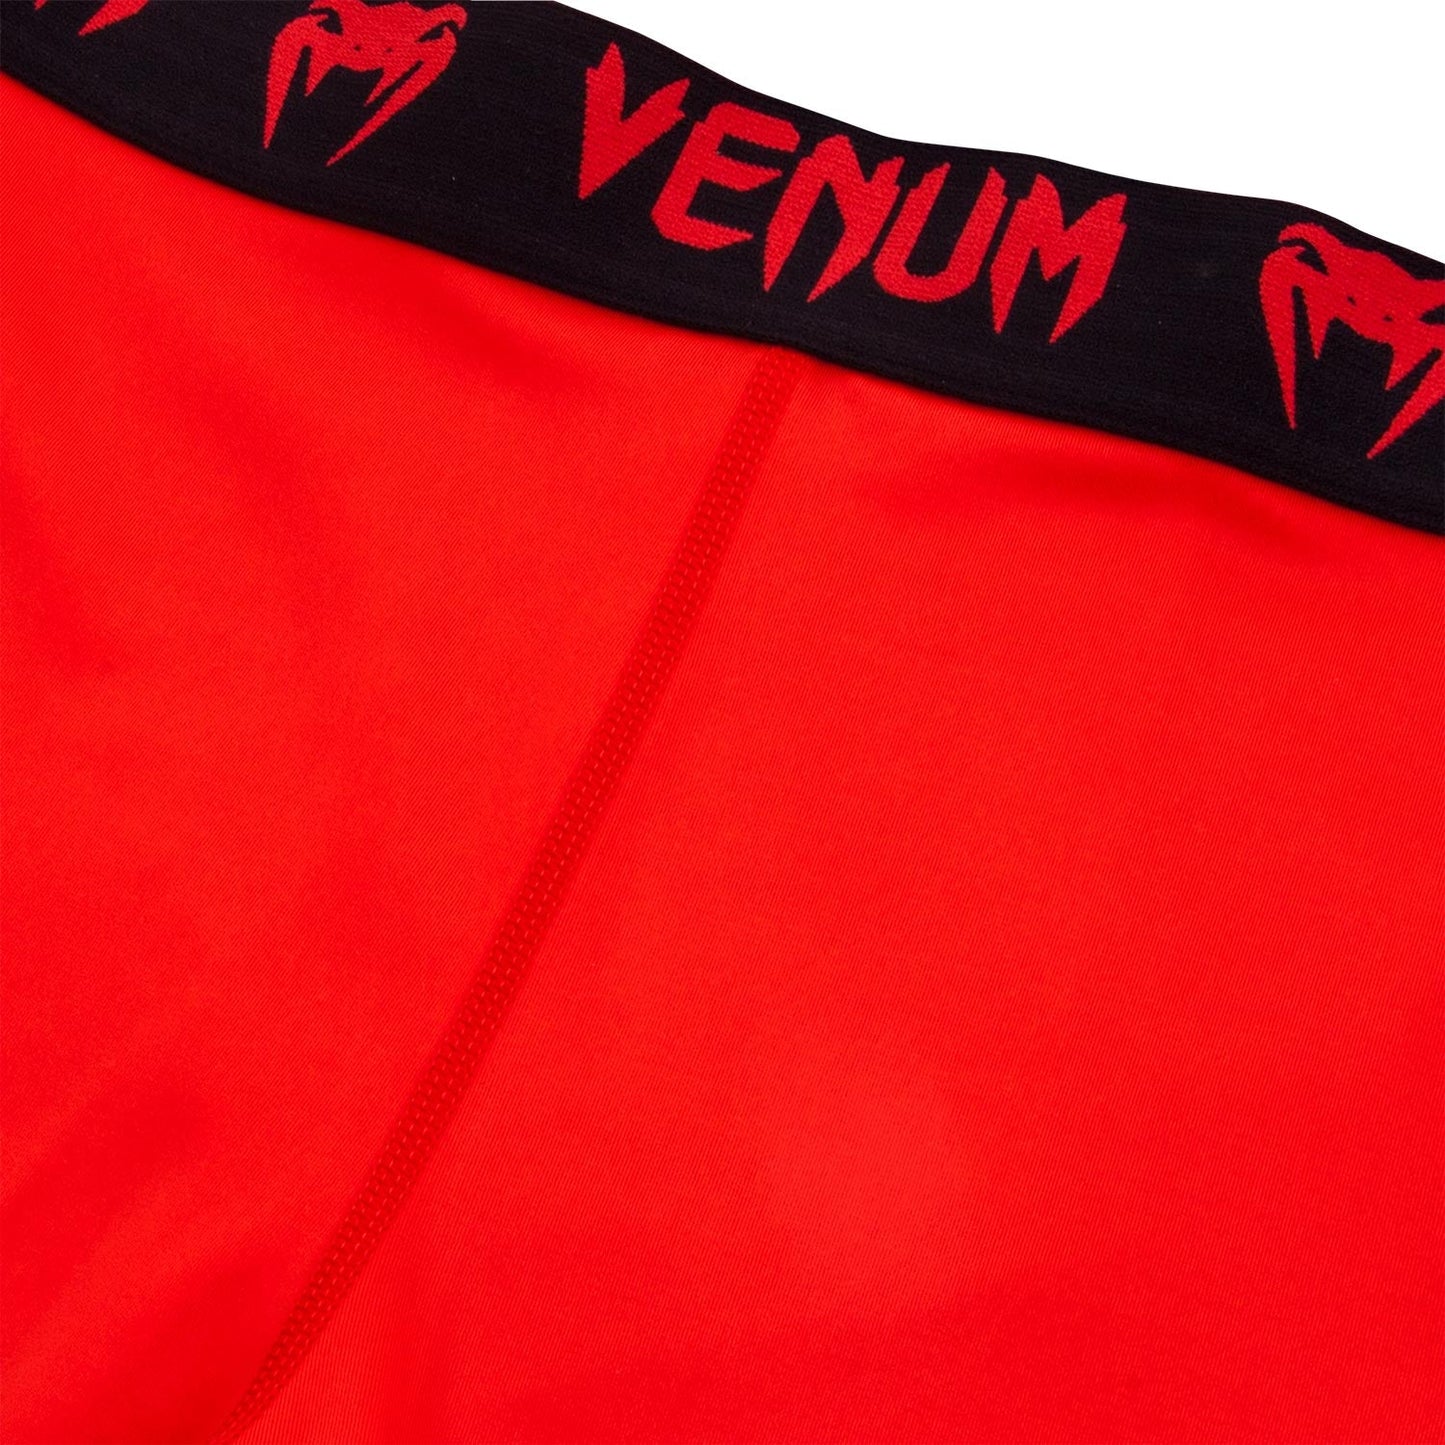 Venum Giant Compression Tights - Red/Black